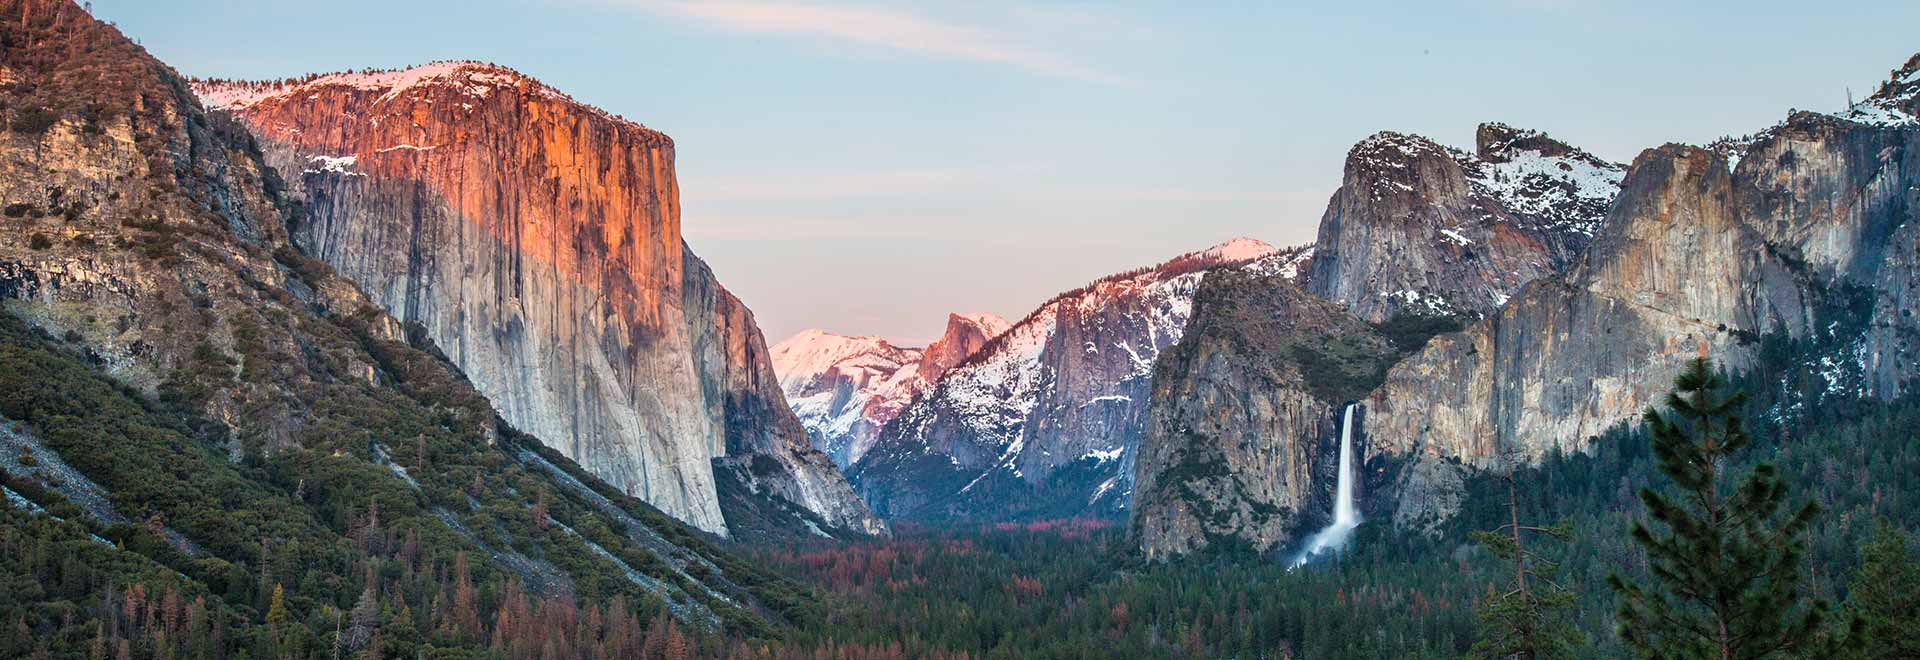 Amerericas Northern California Yosemite National Park m